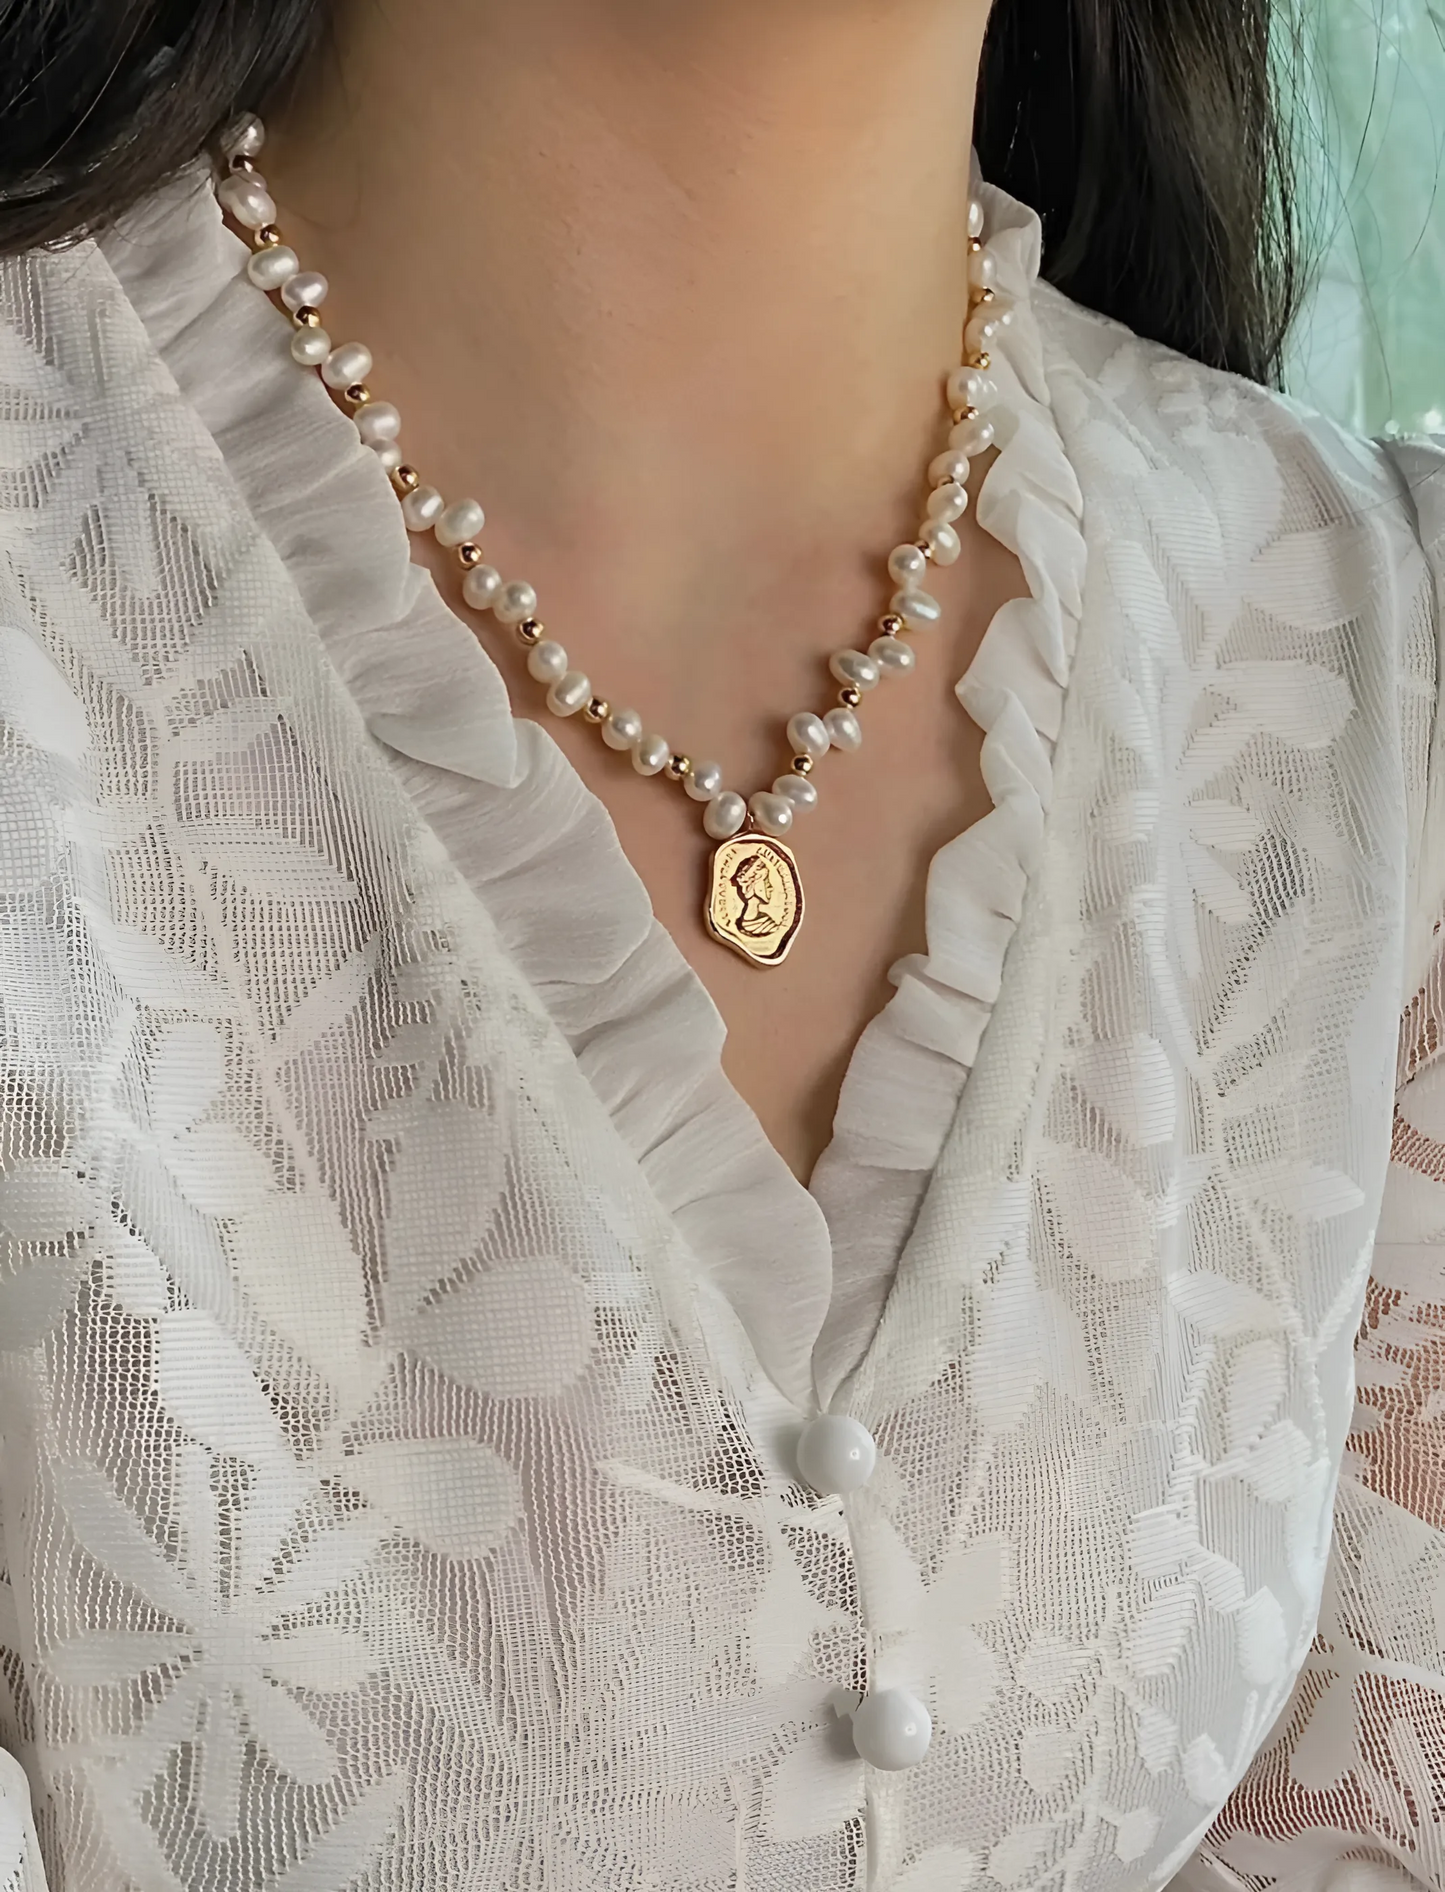 Elizabeth II Australia 1981 Coin Necklace | Pearl necklace | Women's necklace